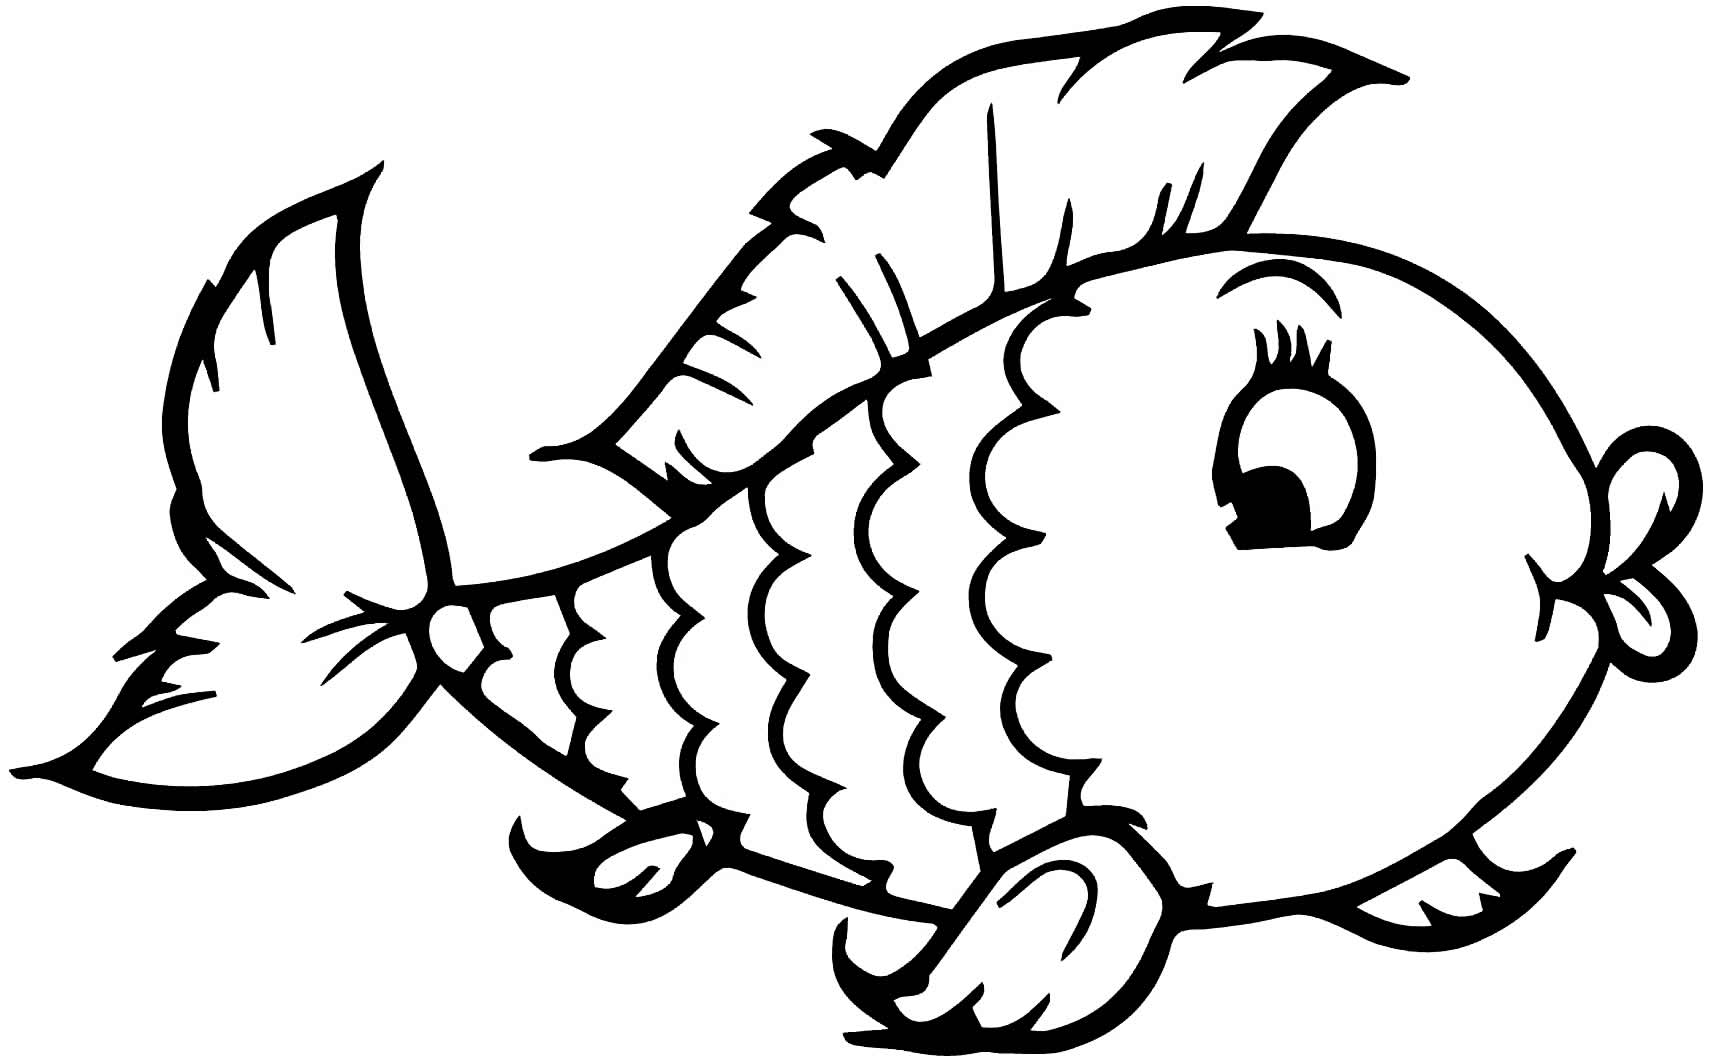 Desenho de peixe para colorir